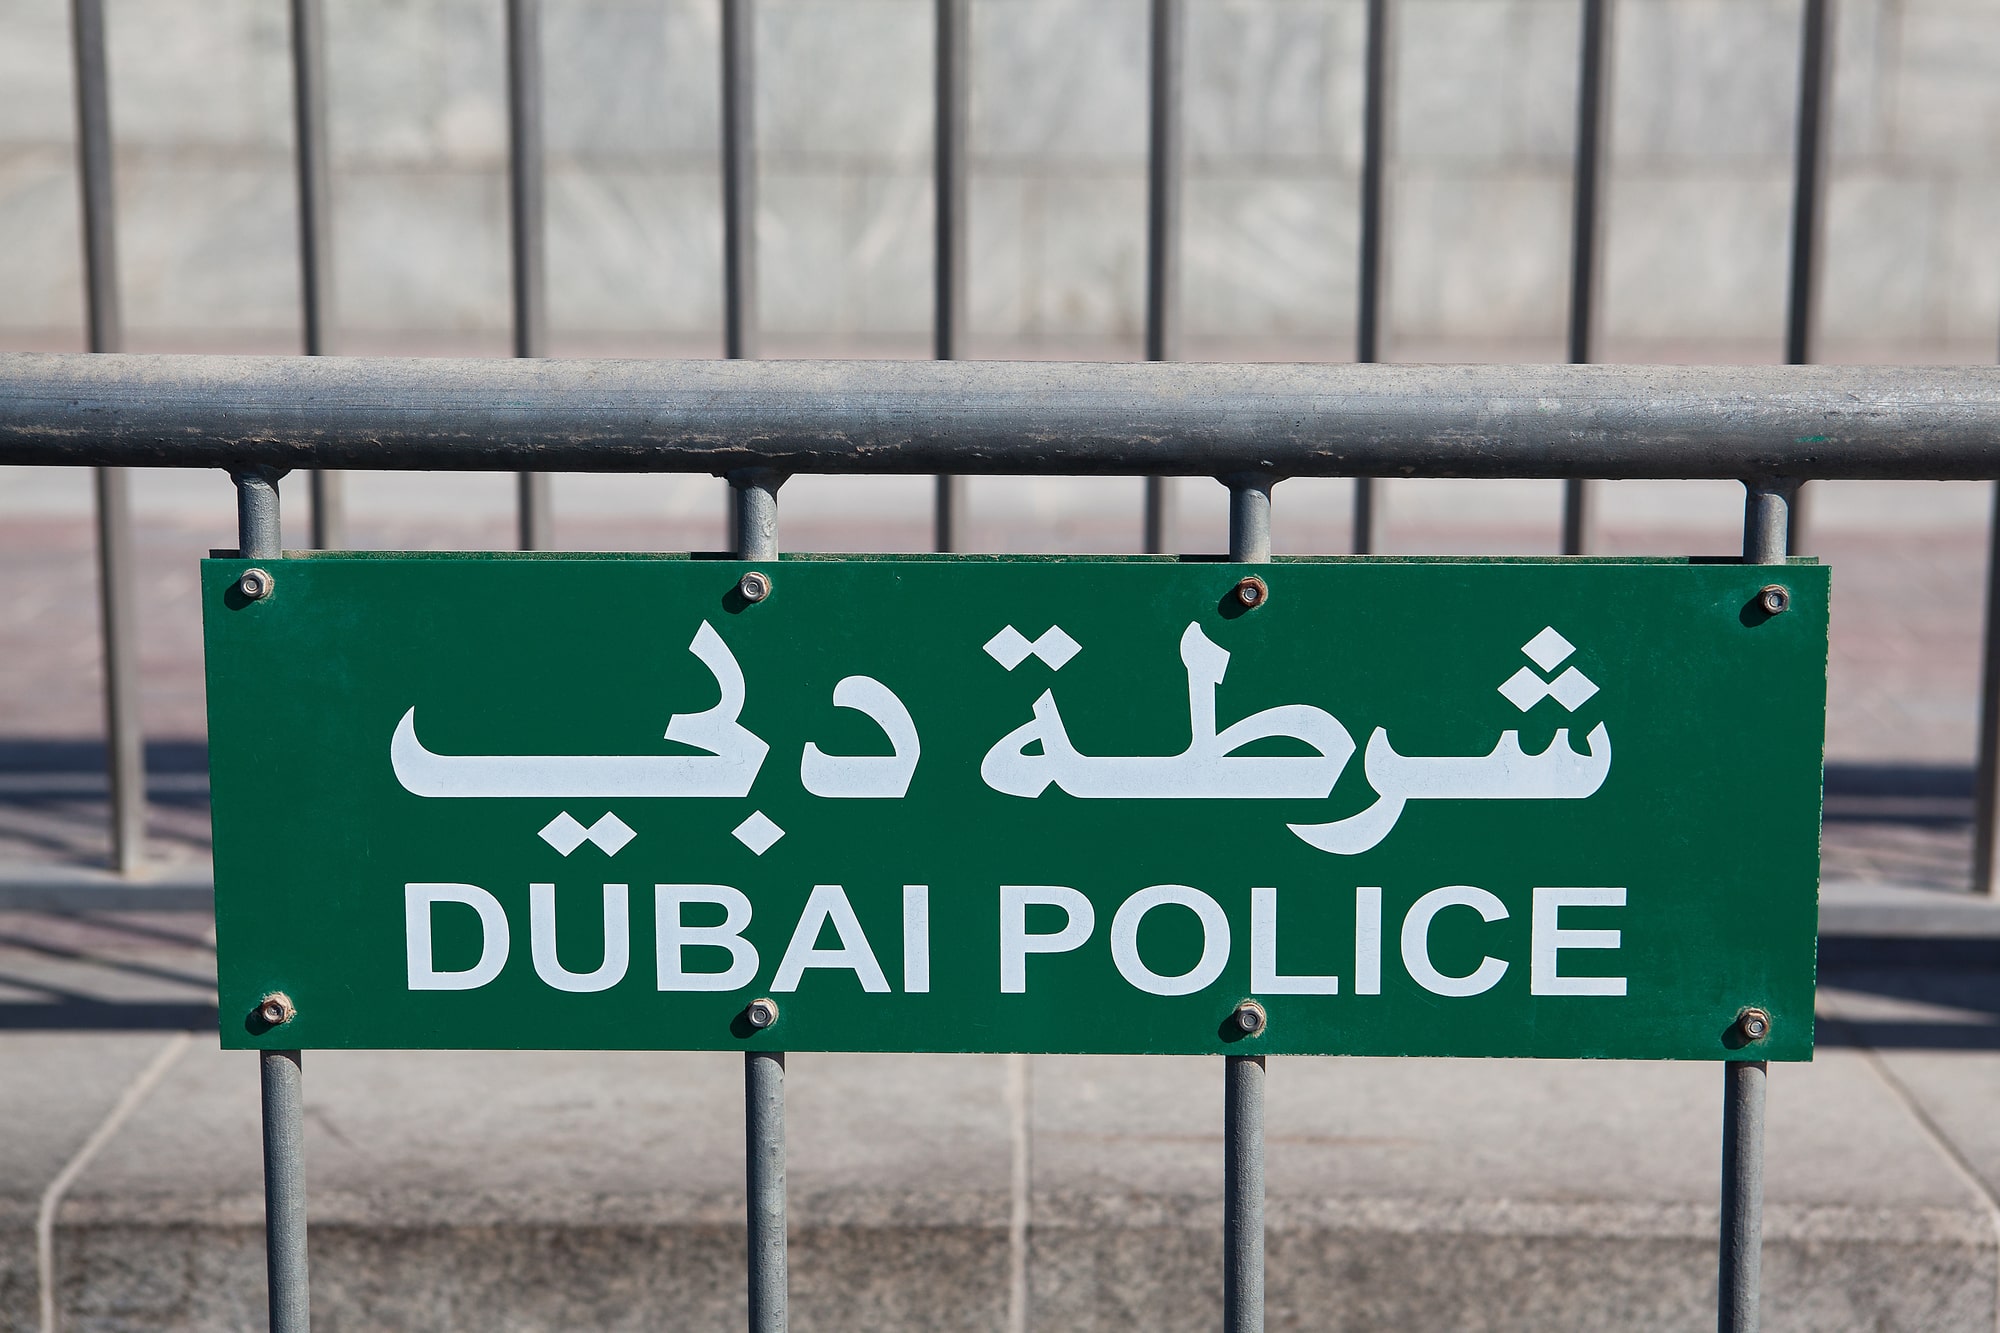 Dubai Police teams up with a crypto platform to combat frauds